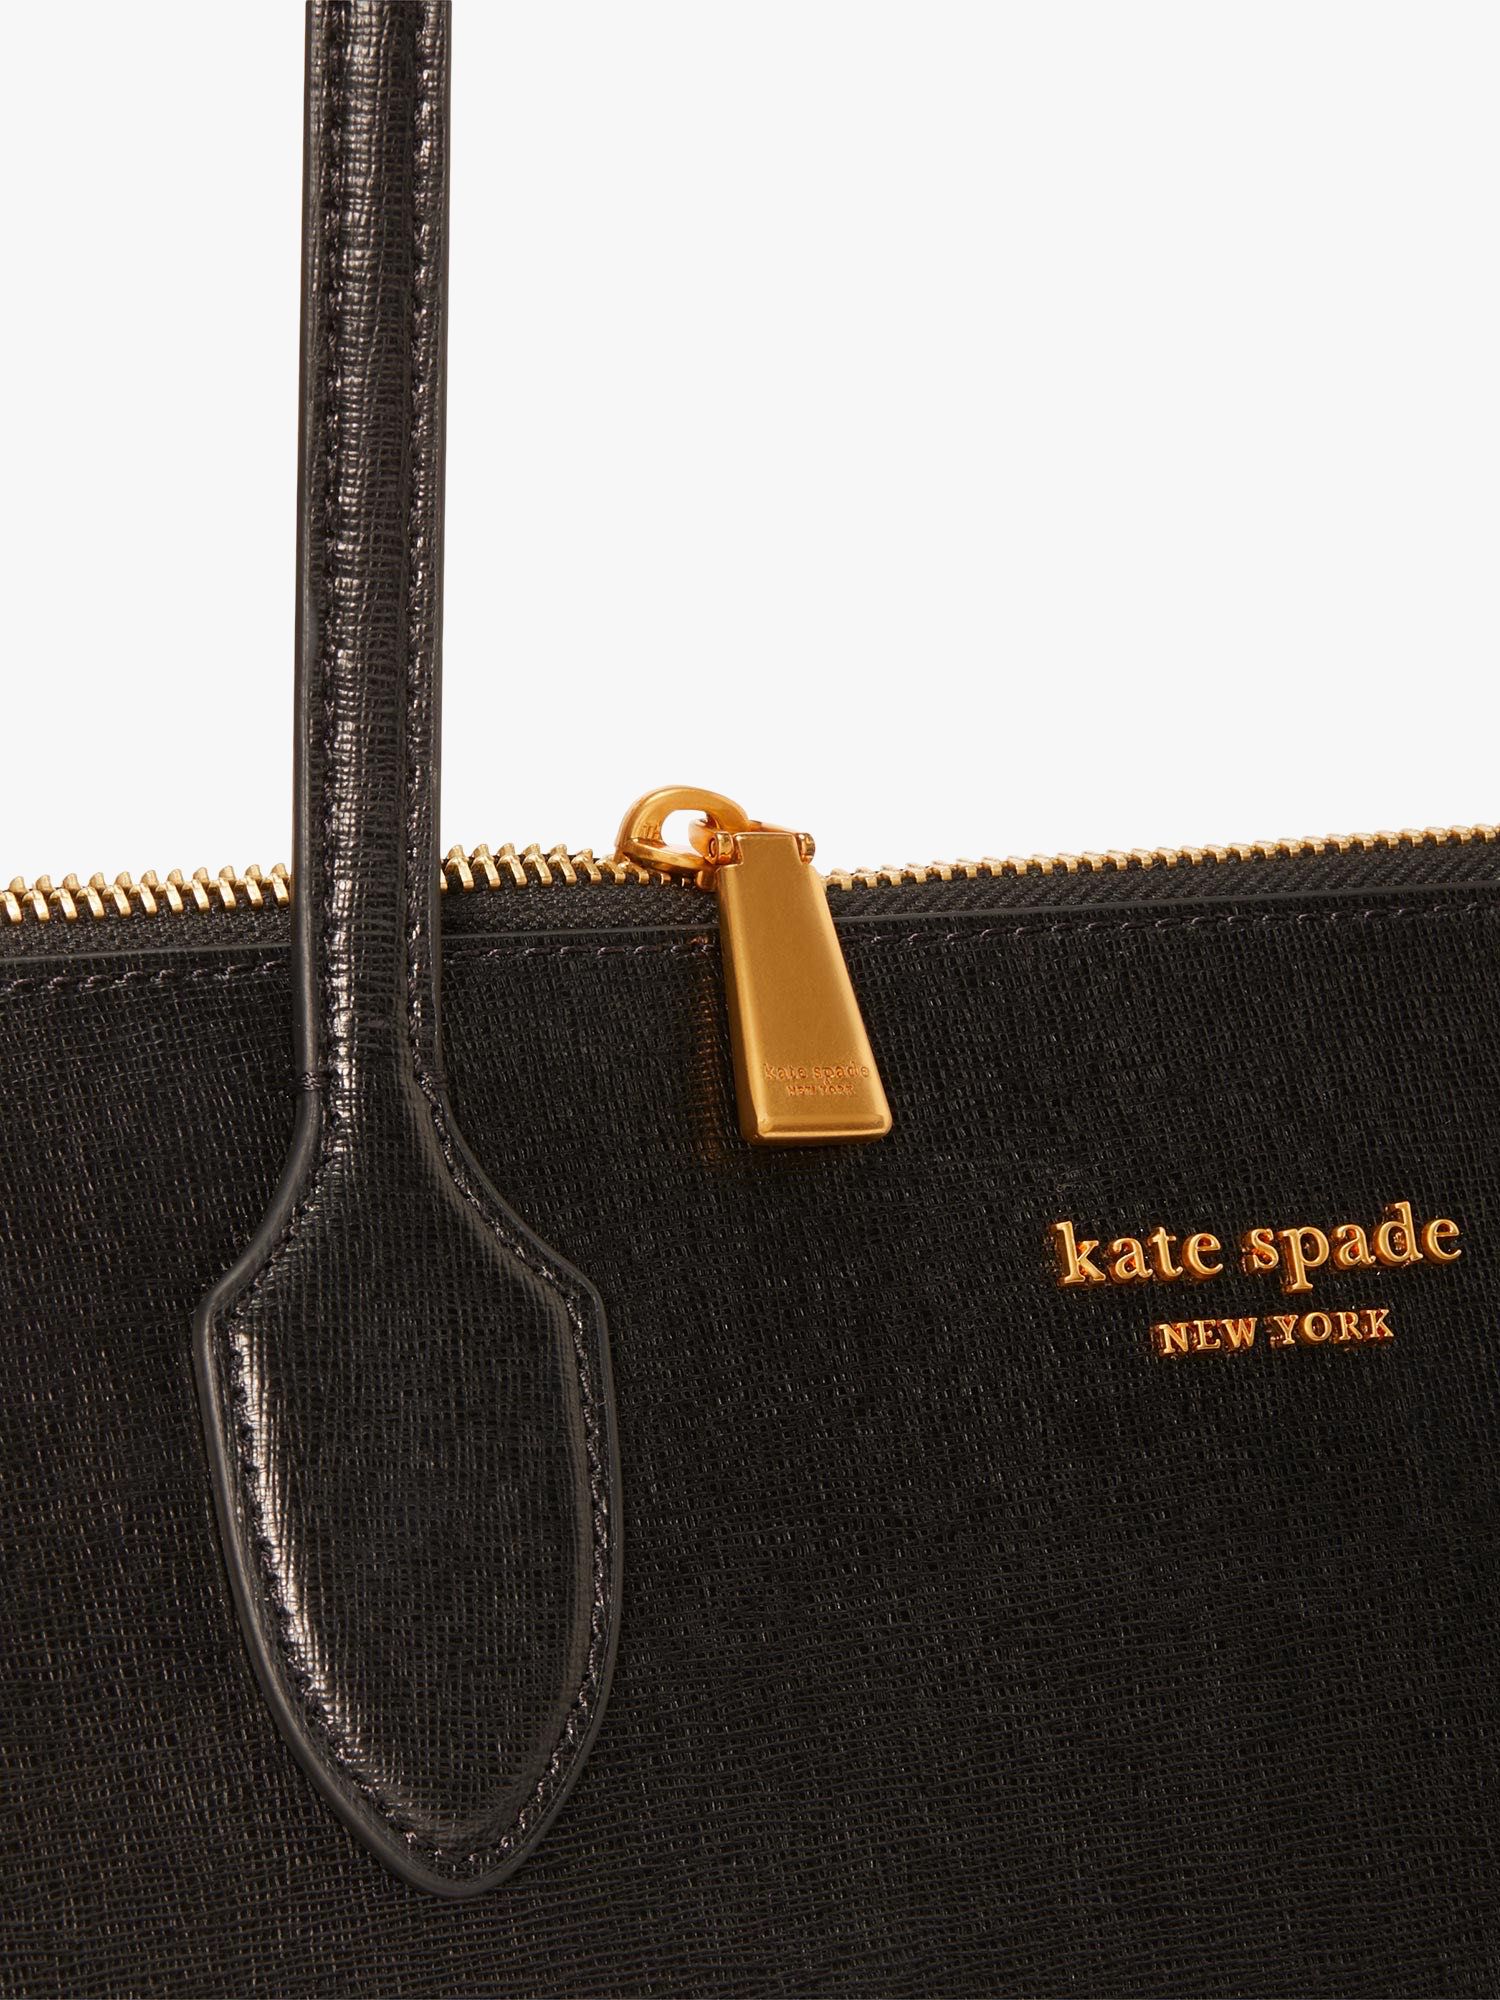 Buy kate spade new york Bleecker Large Leather Tote, Black Online at johnlewis.com